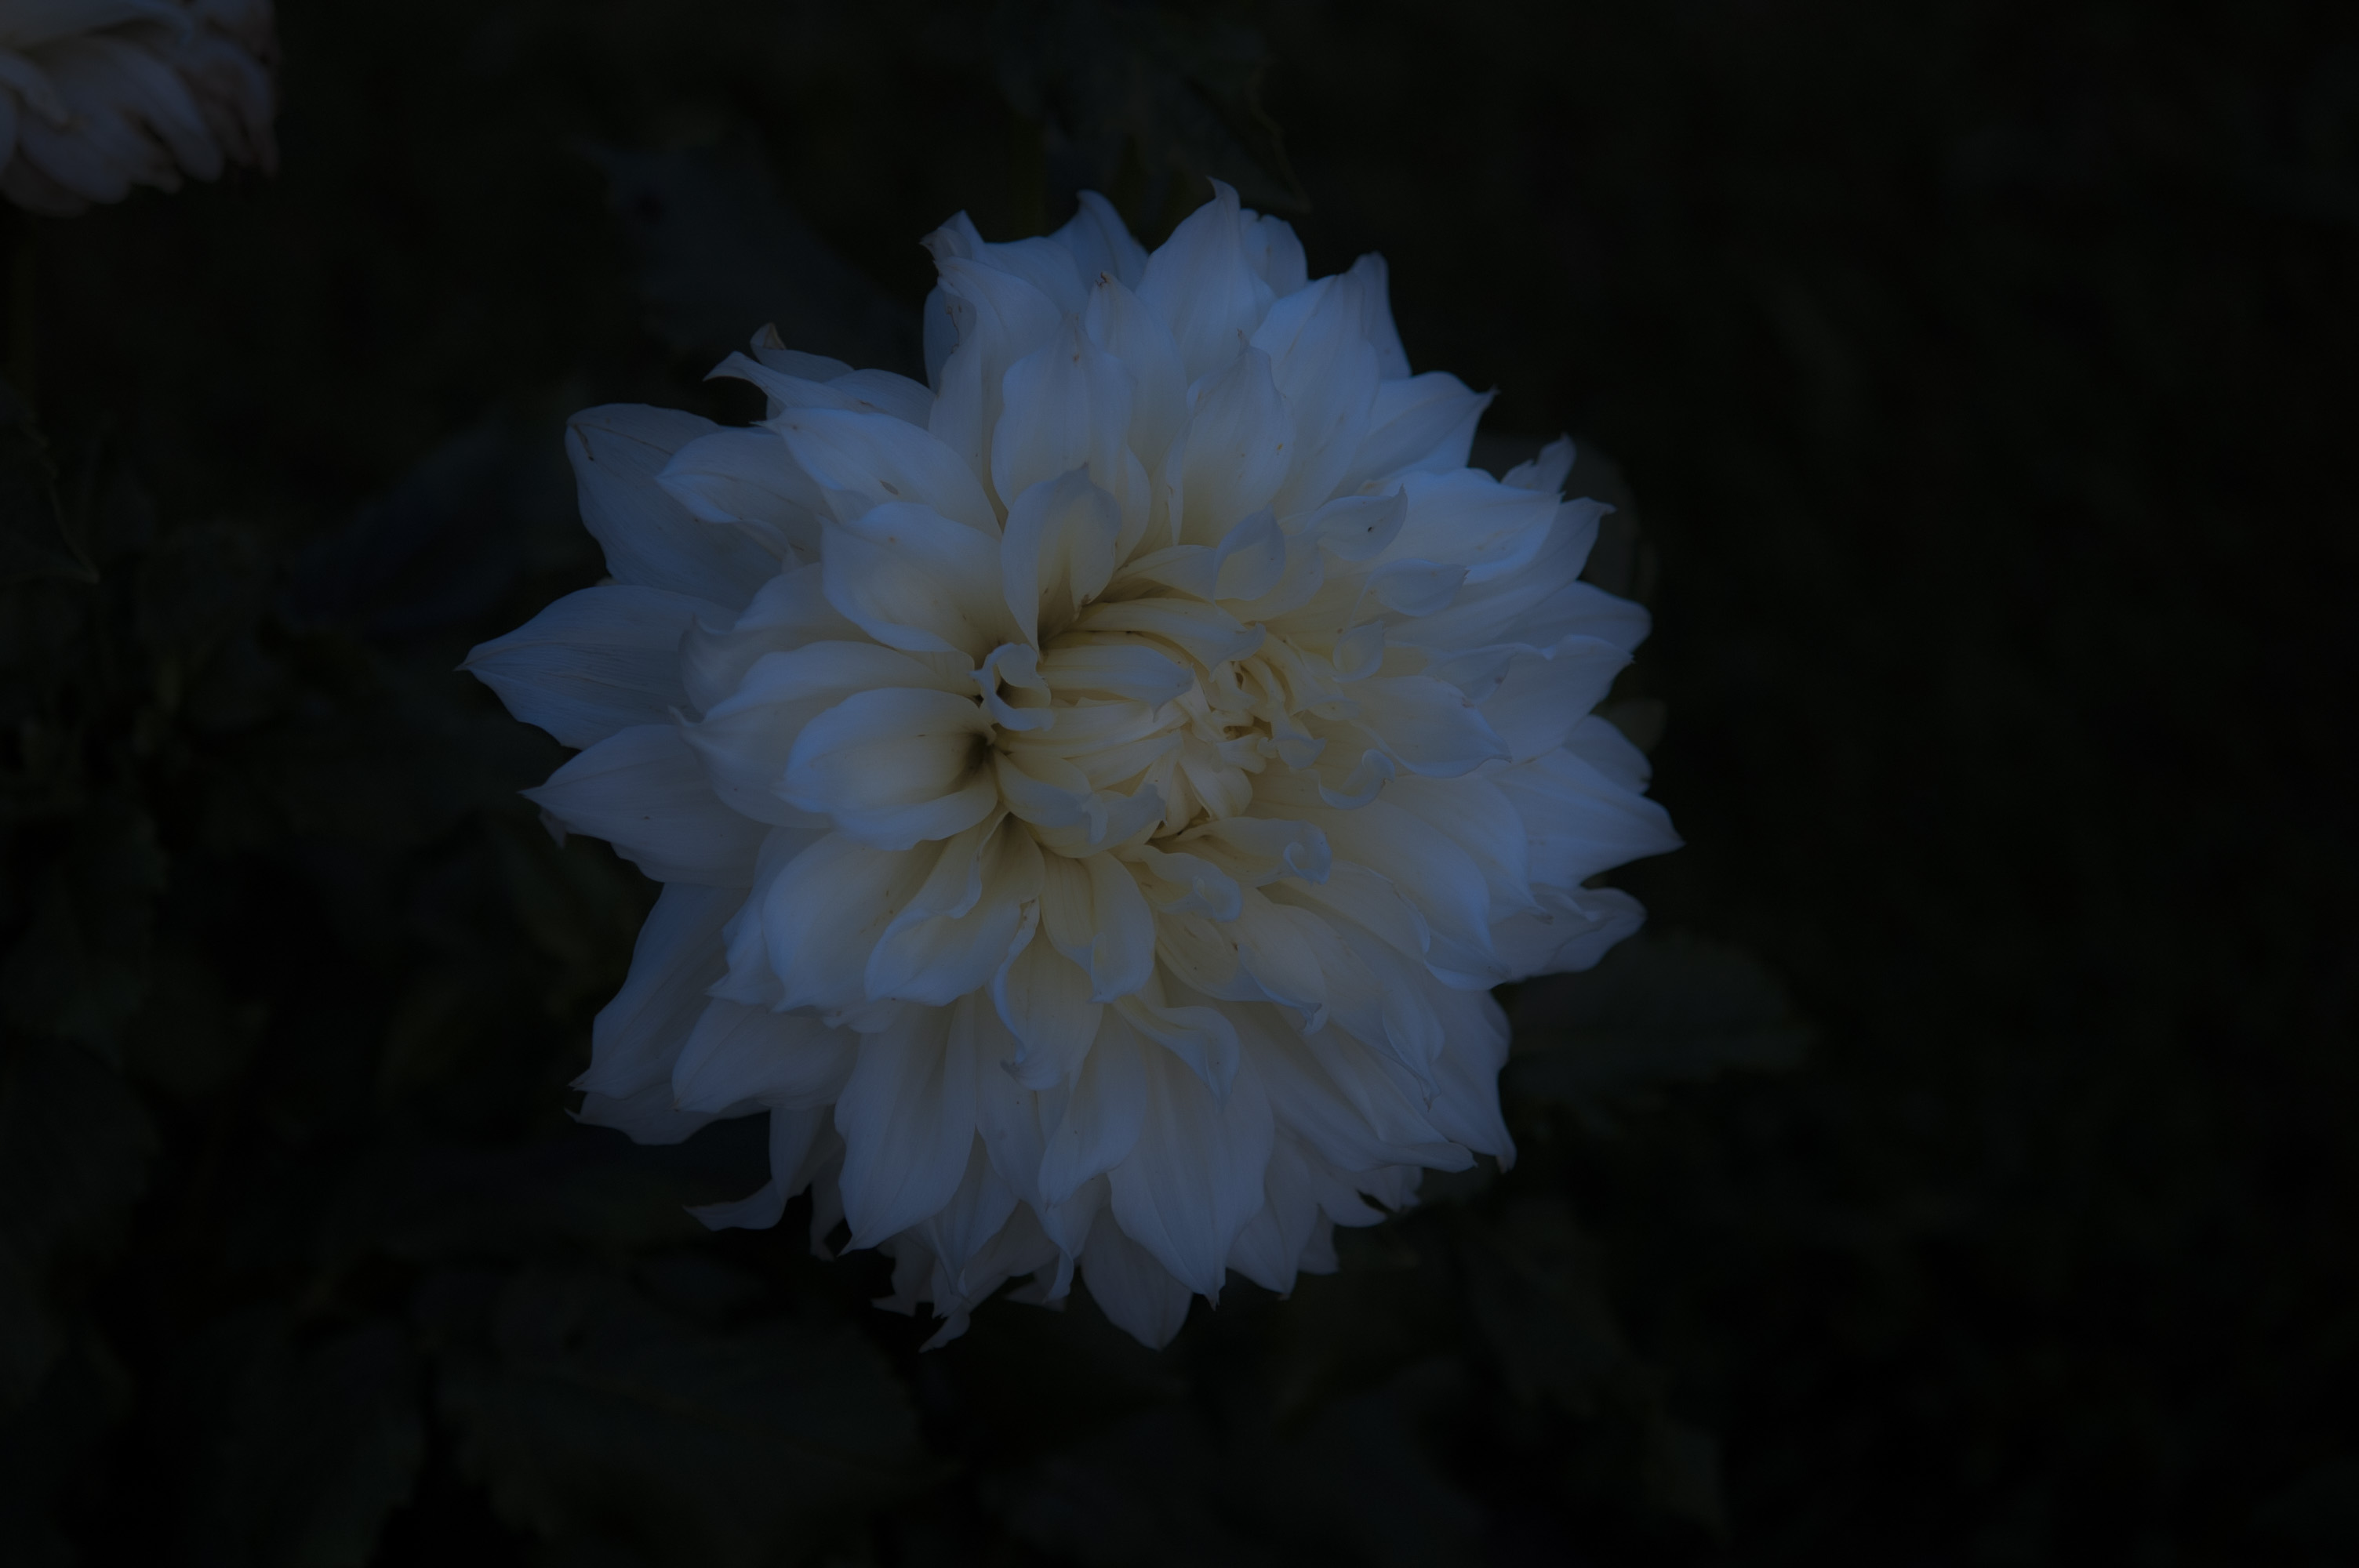 sun-goes-down-flower-looks-magical.jpg